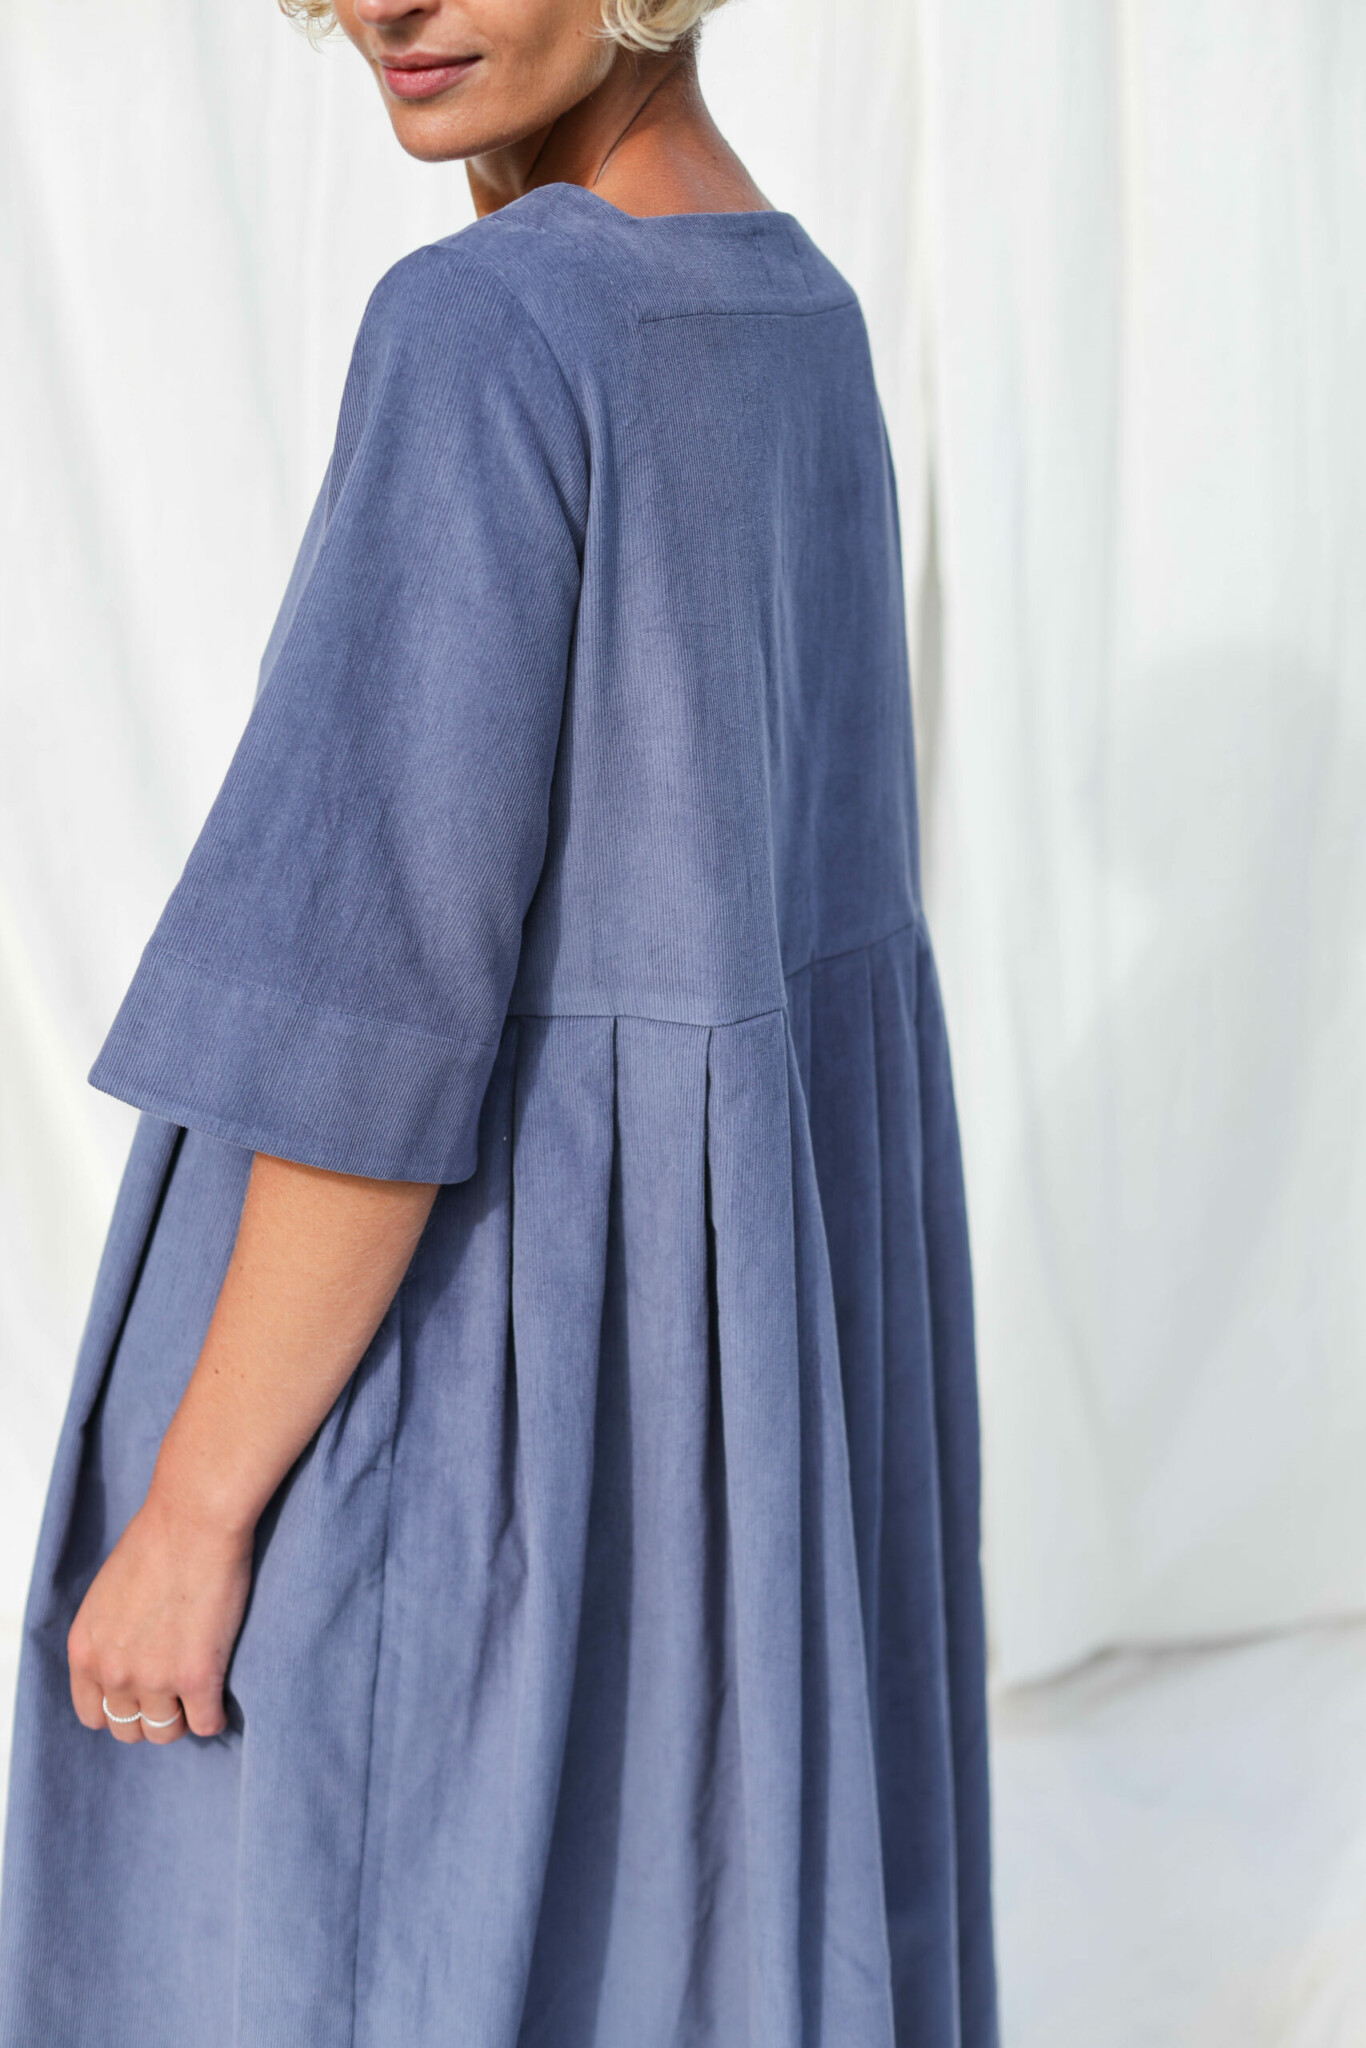 Needlecord square neck dress VALERIE – OffOn